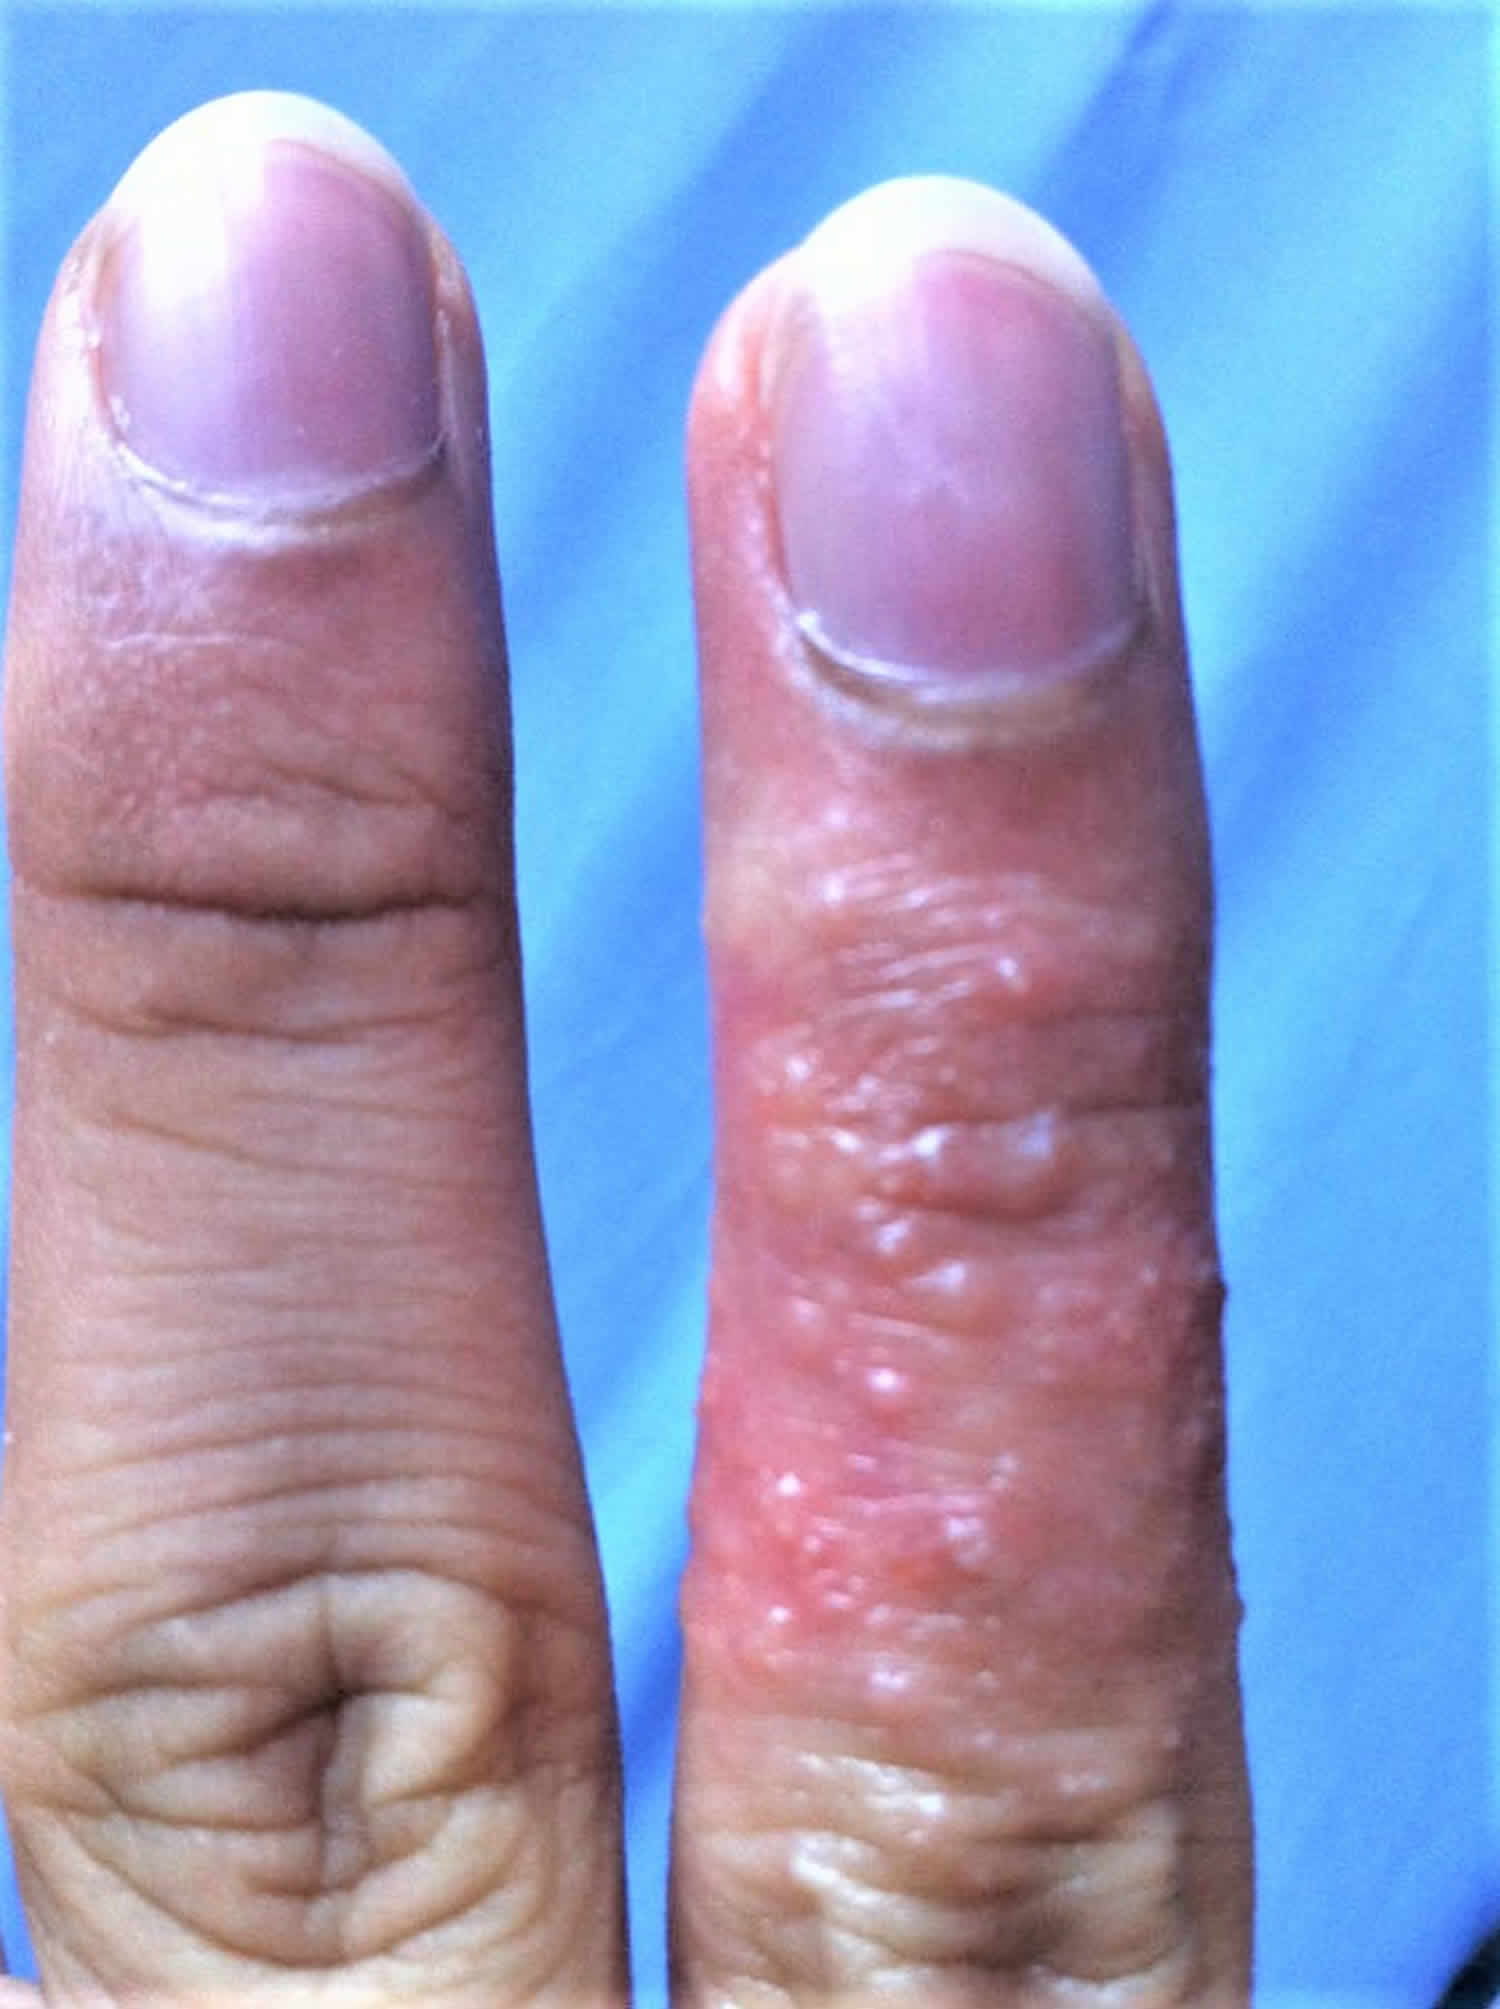 nails diseases ppt pdf - د. سلام التميمي - Muhadharaty